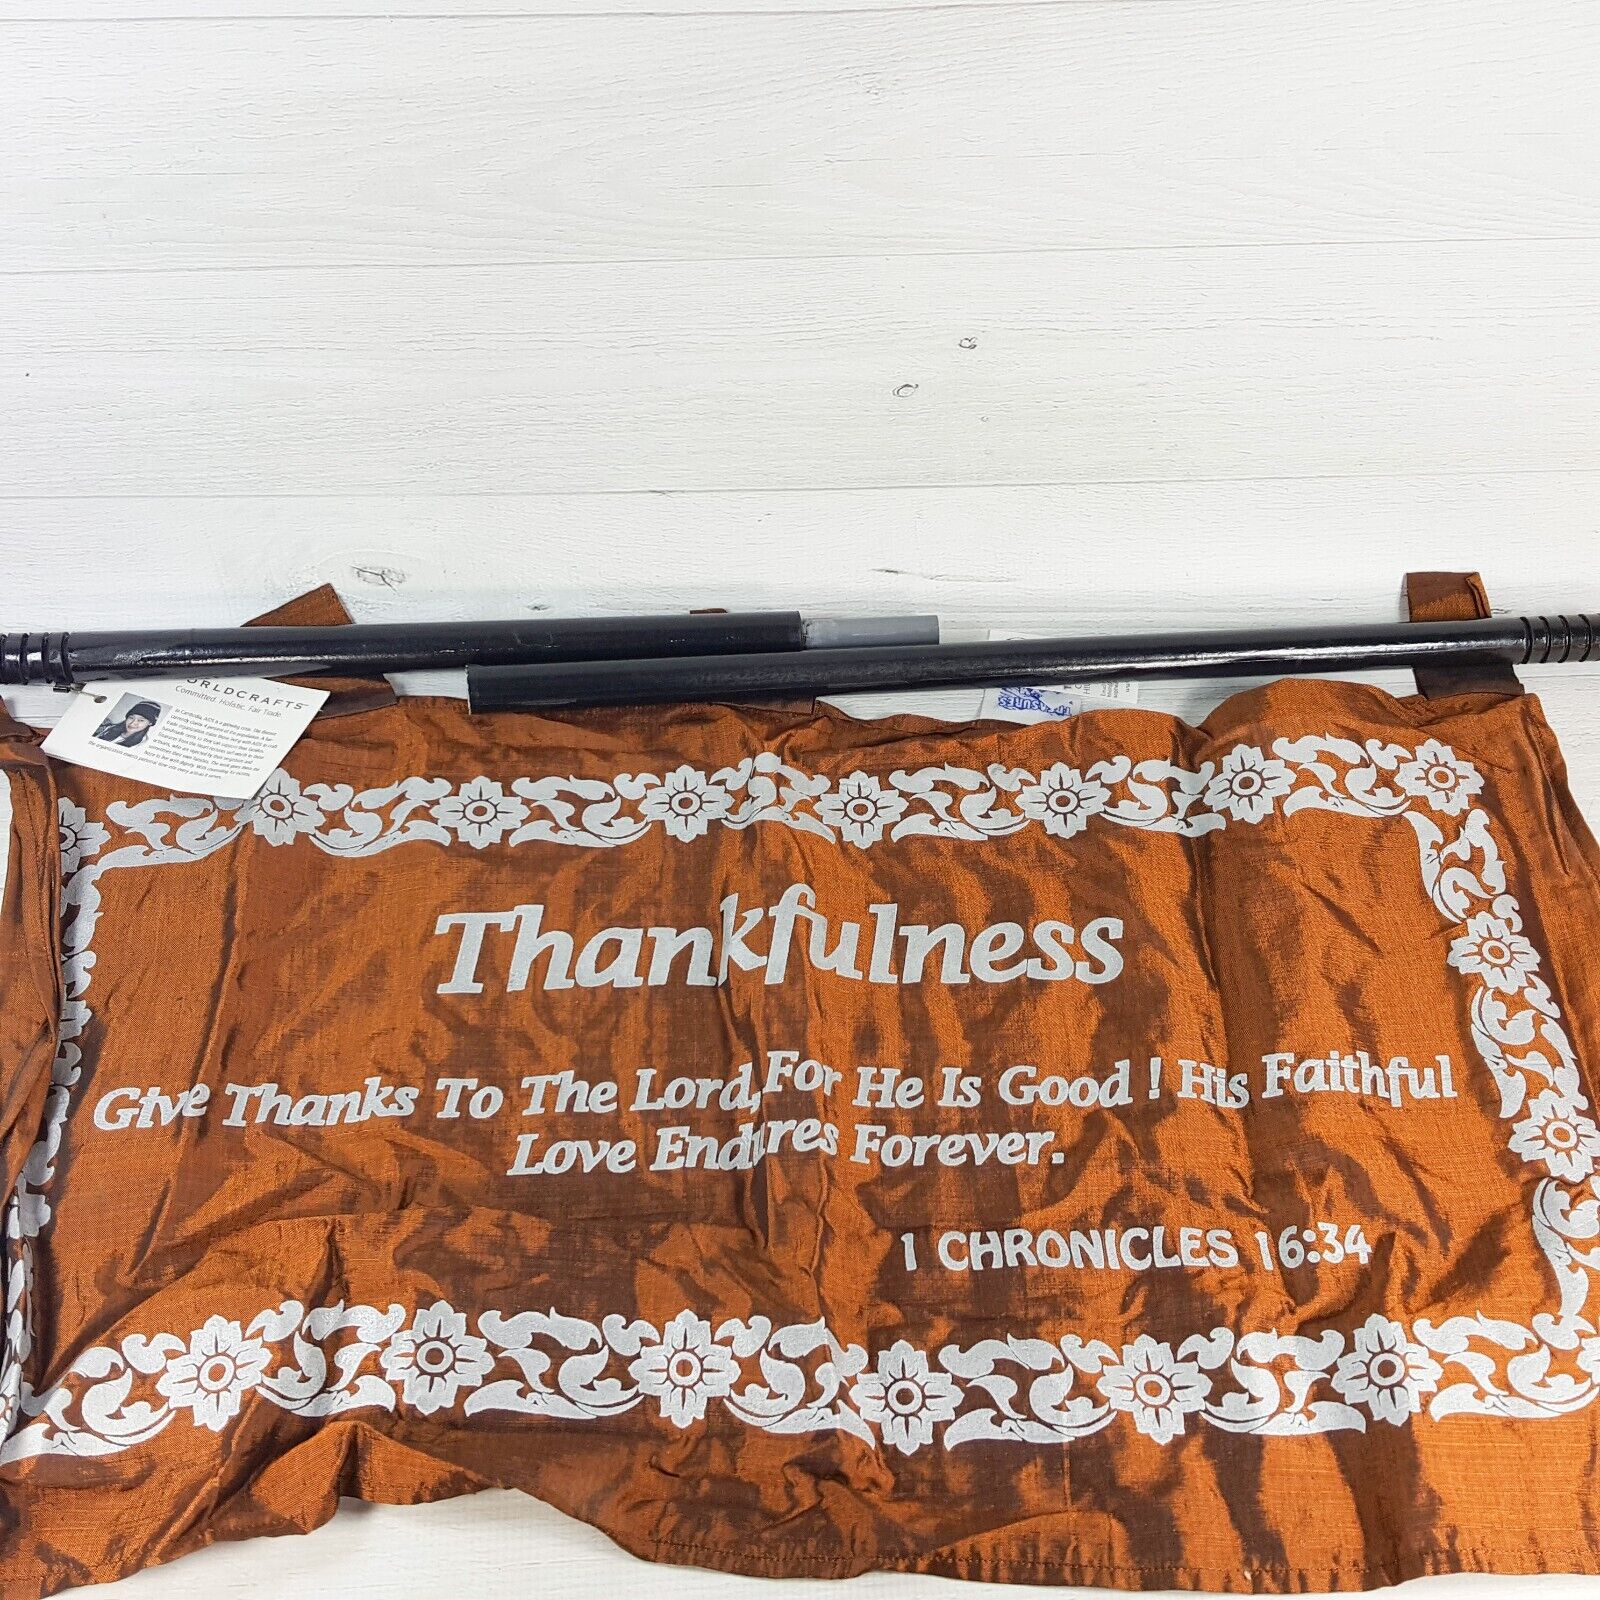 Worldcrafts Fair Trade Thankfulness Fabric Banner w Wood Dowel Chronicles 16:34